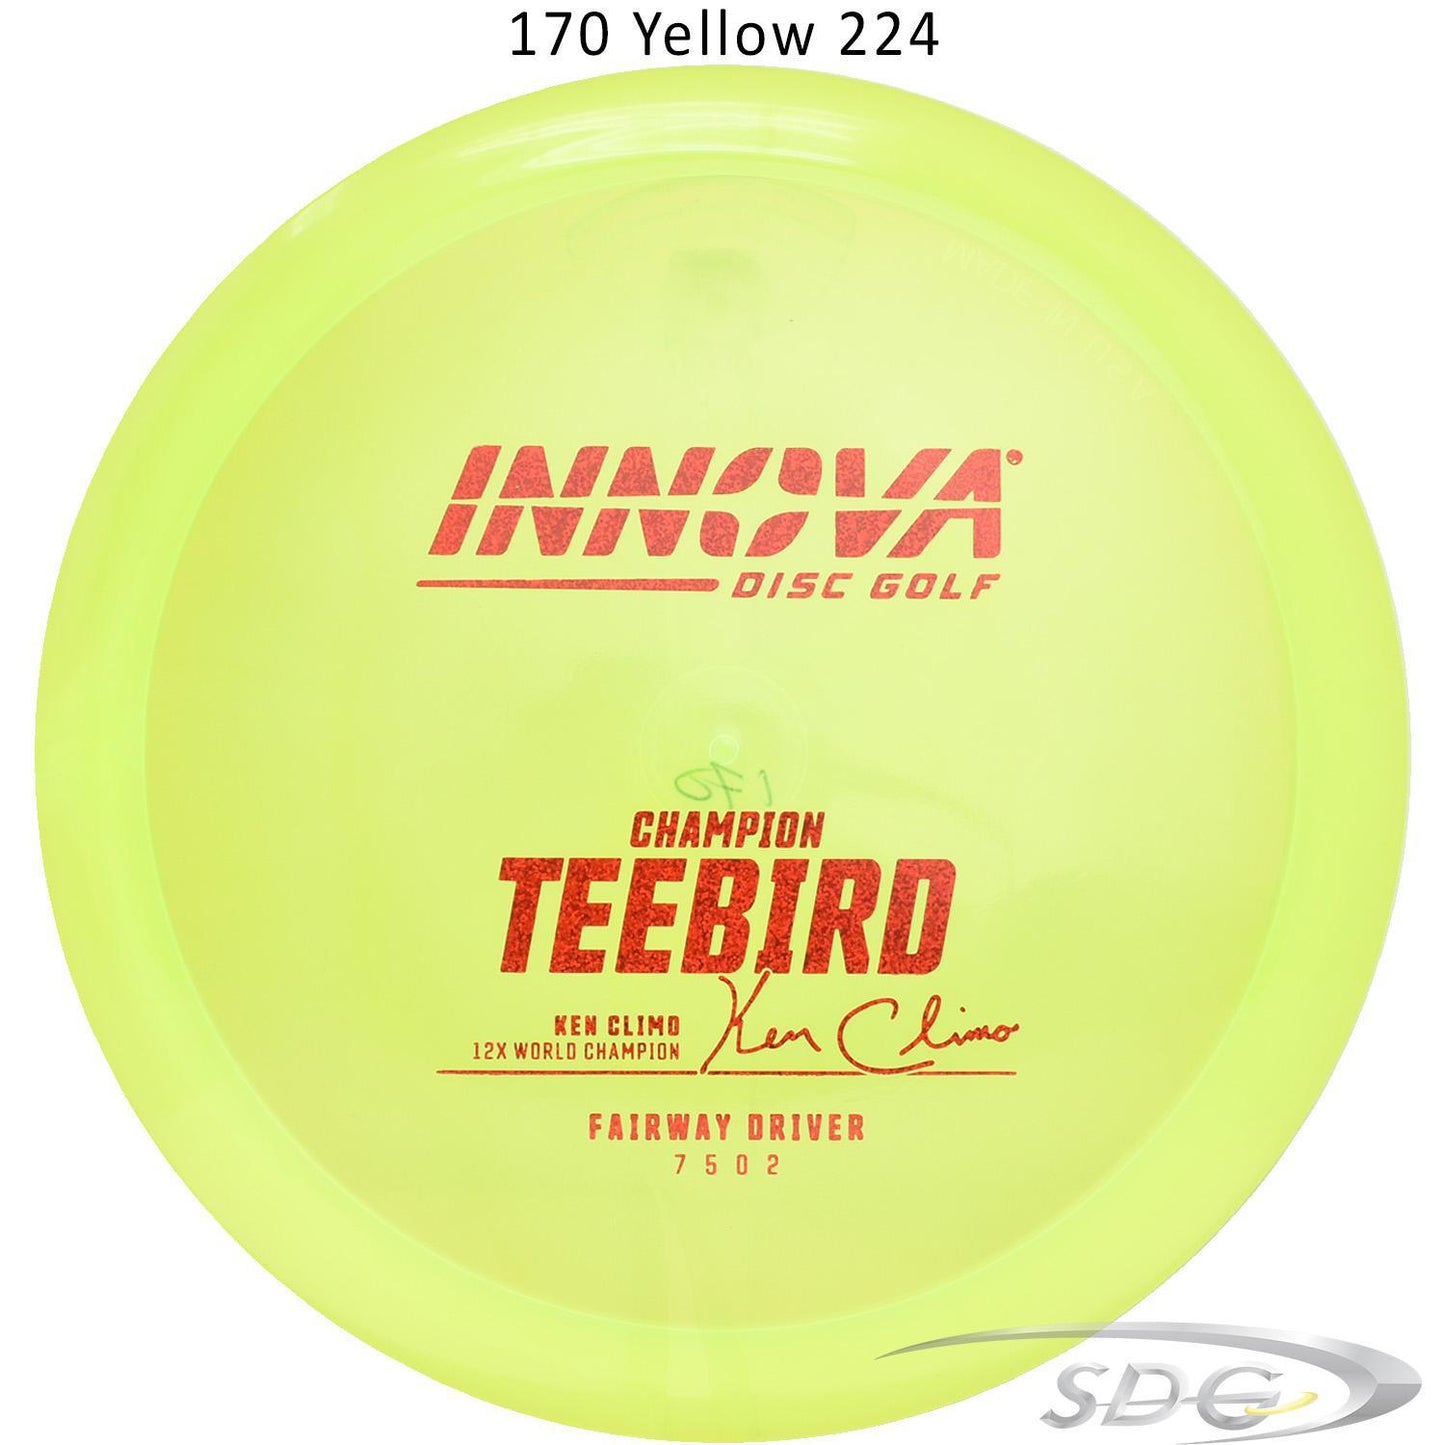 innova-champion-teebird-disc-golf-fairway-driver 170 Yellow 224 